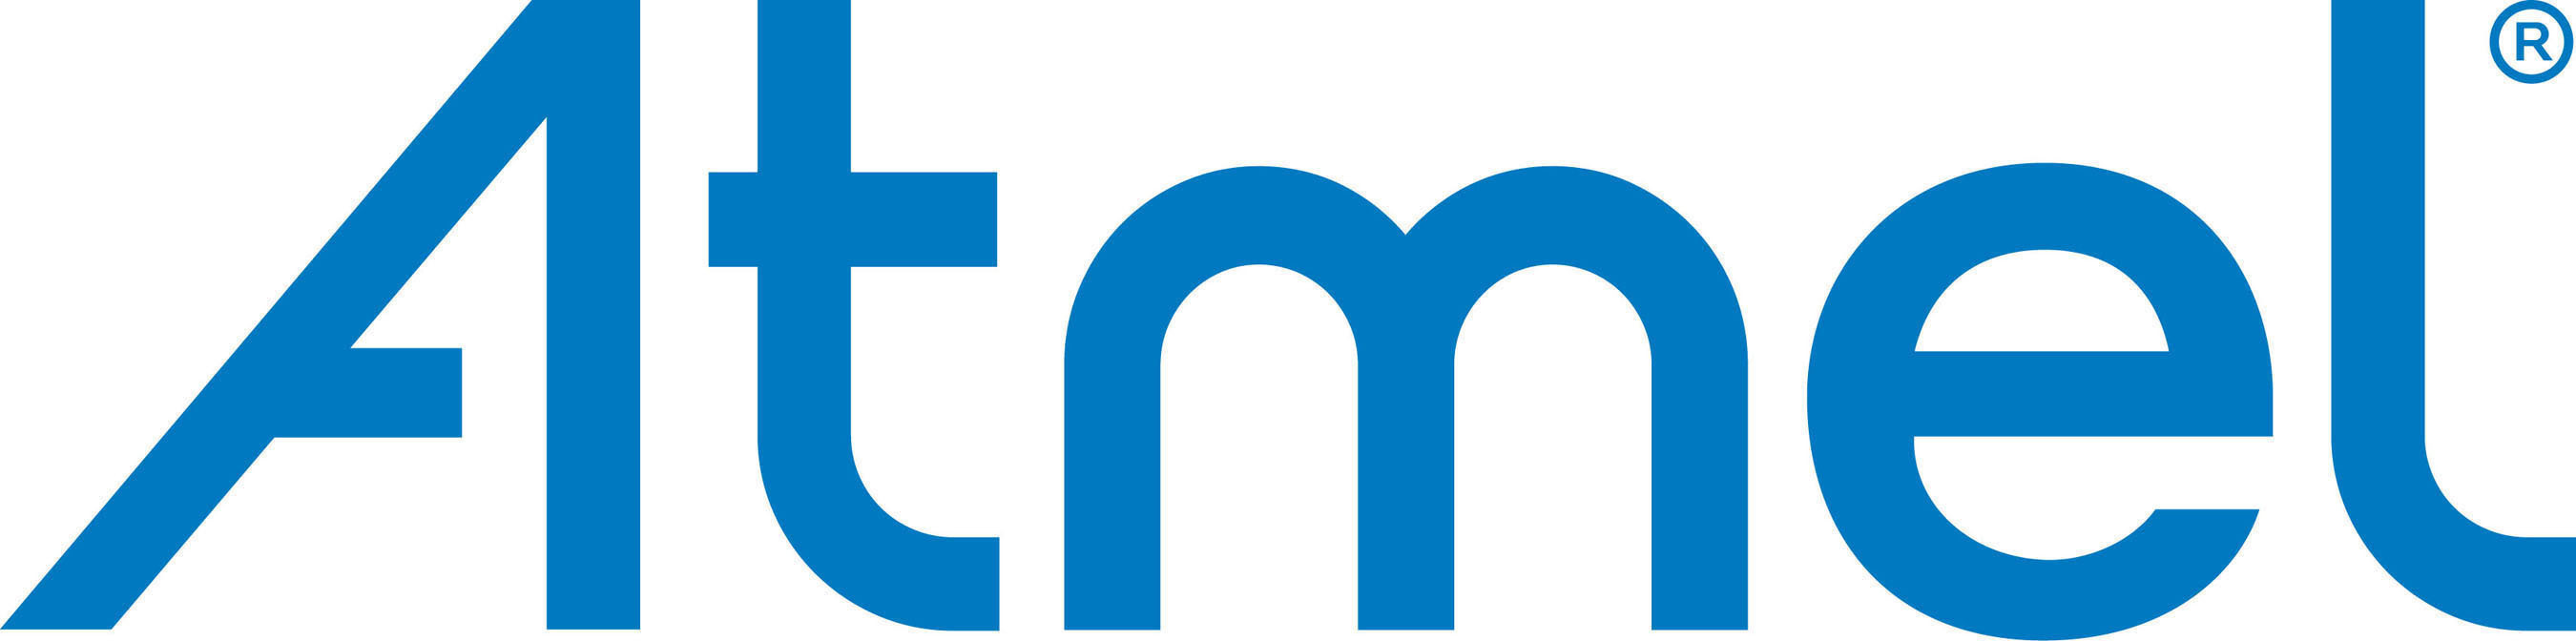 Atmel logo. (PRNewsFoto/Atmel Corporation) (PRNewsFoto/)